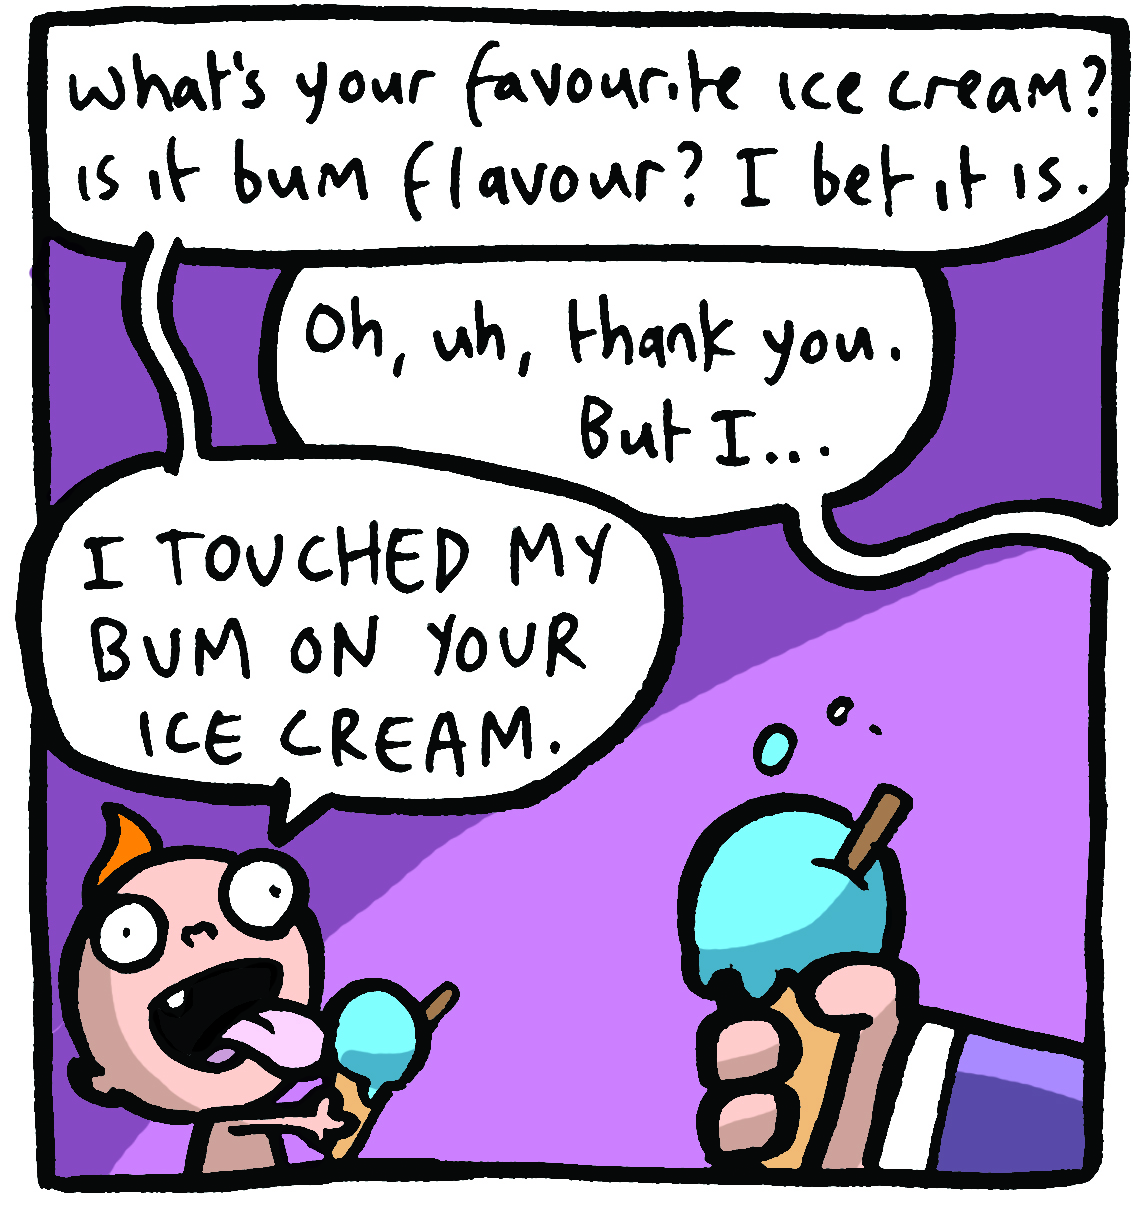 Bum-flavoured ice cream? Delicacy of the elite?